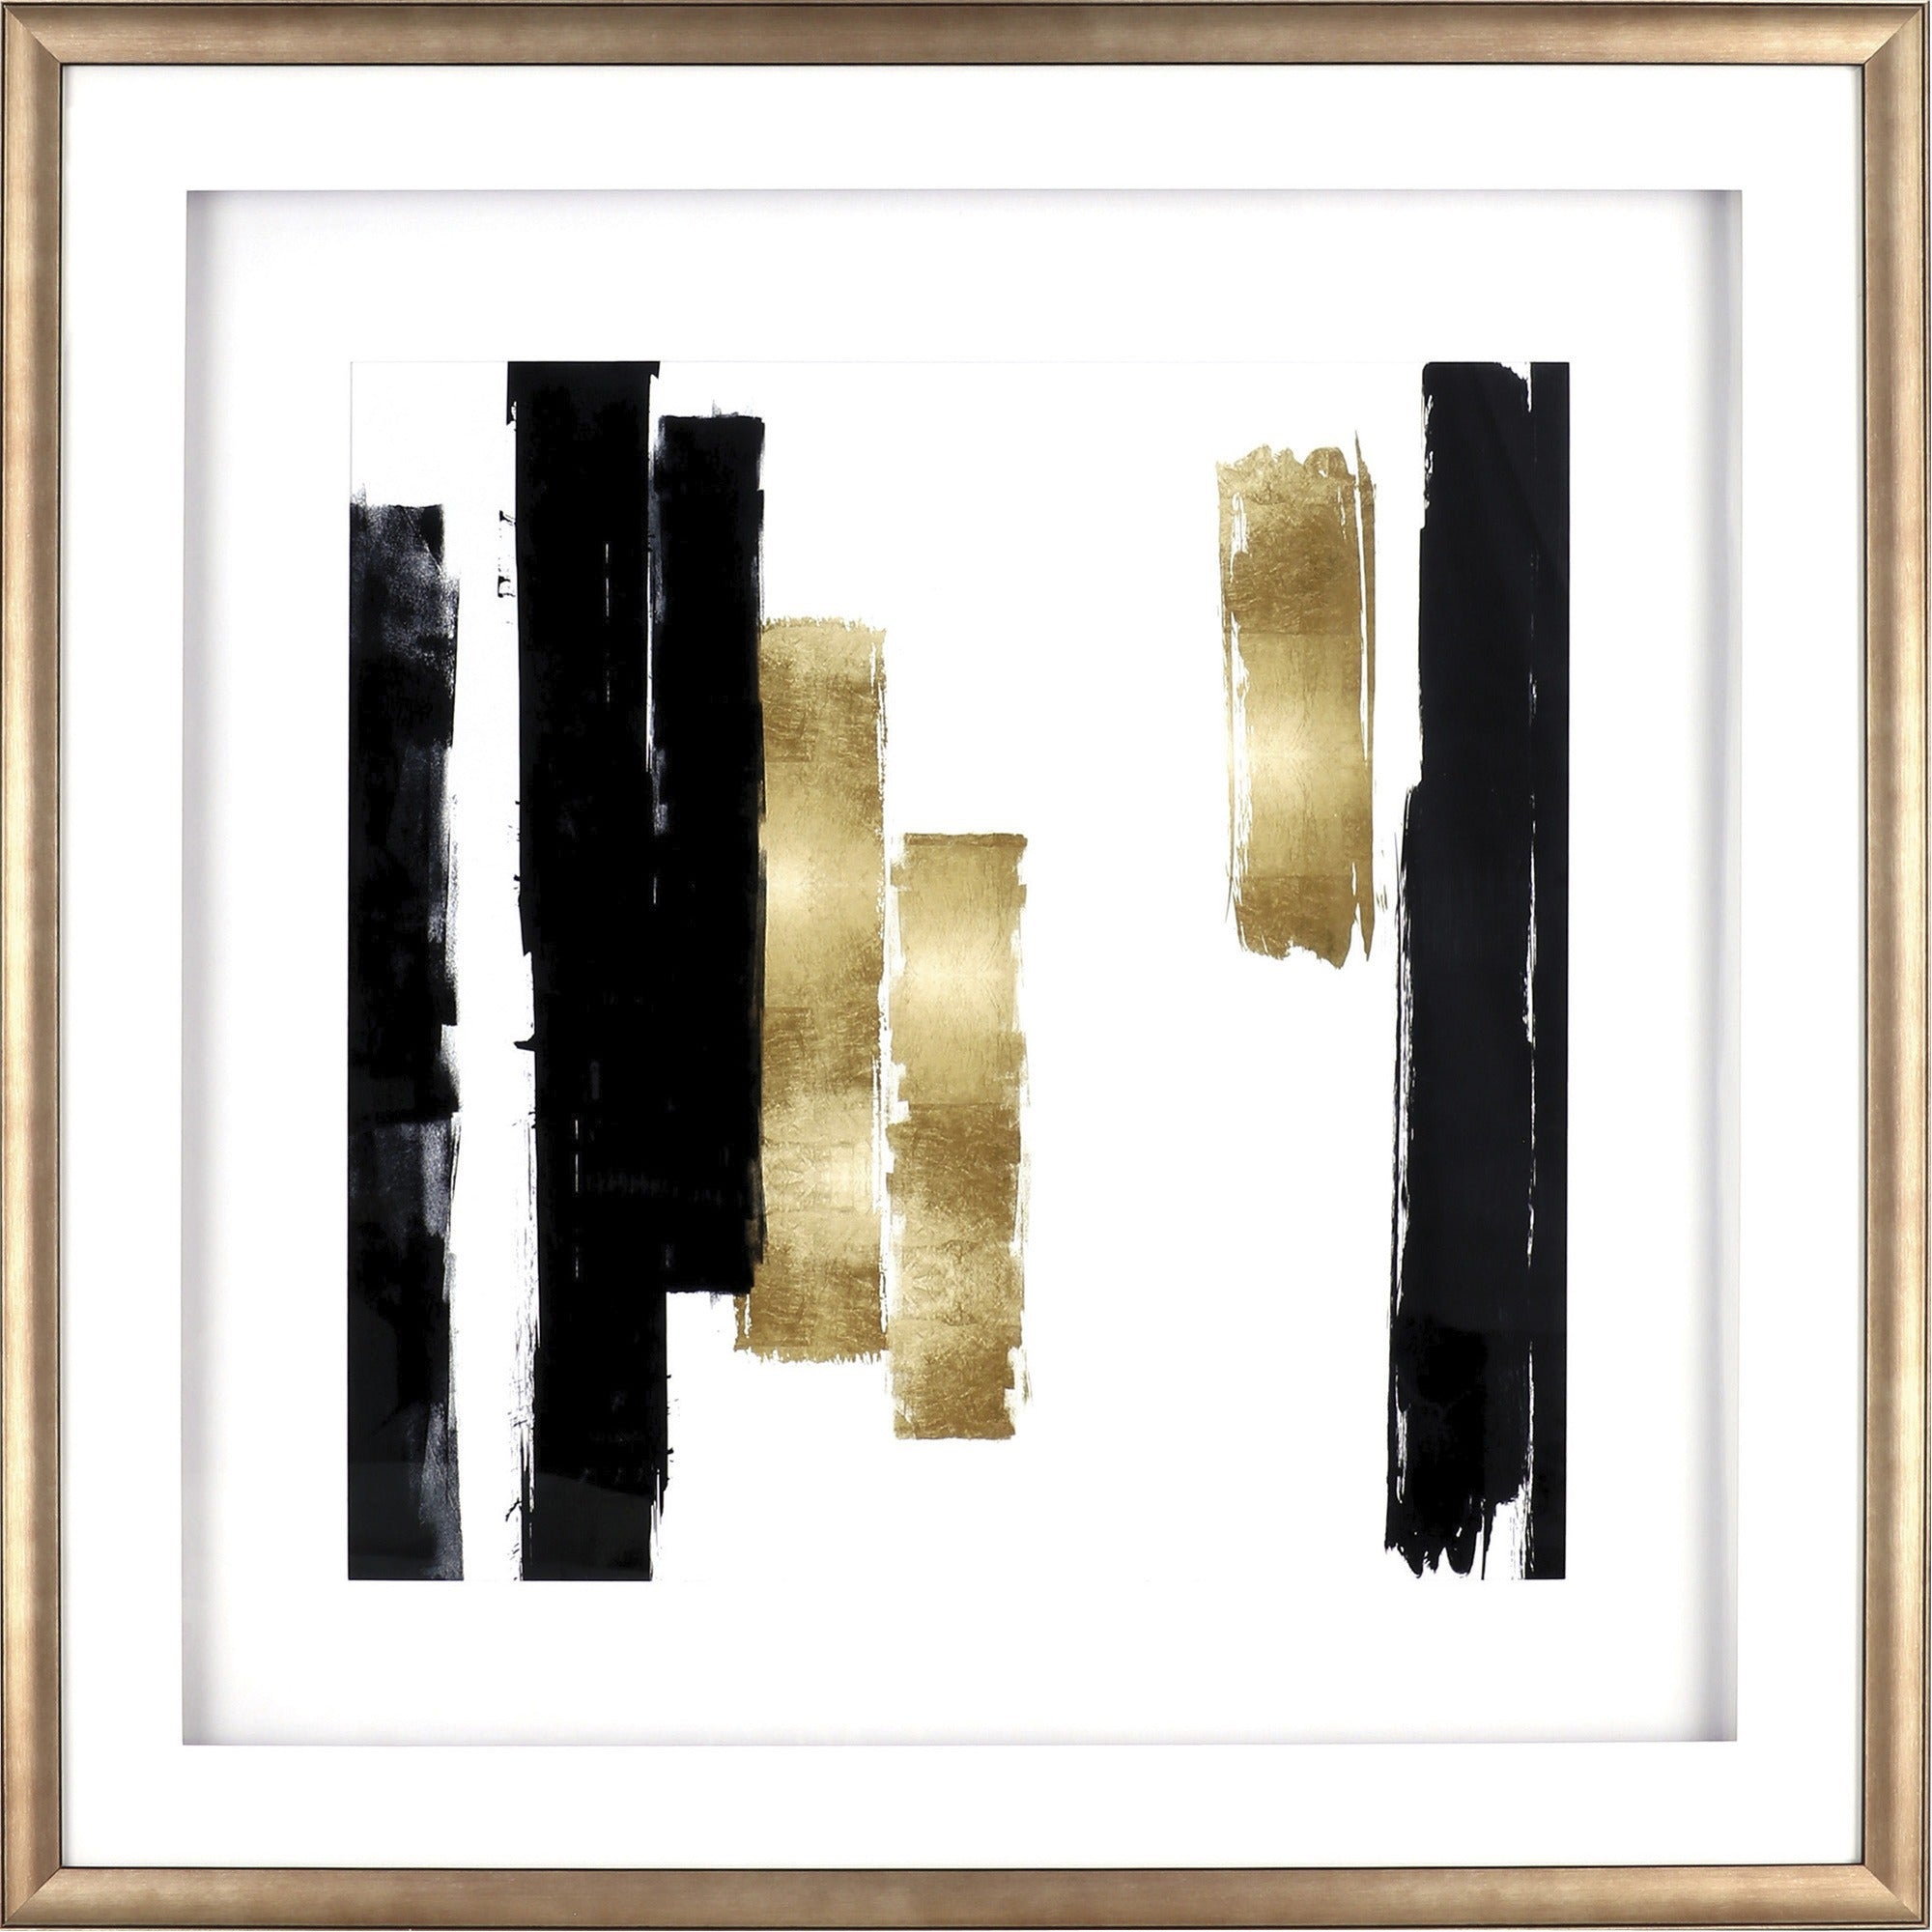 Lorell Blocks II Framed Abstract Artwork - 29.50" x 29.50" Frame Size - 1 Each - Black, Gold